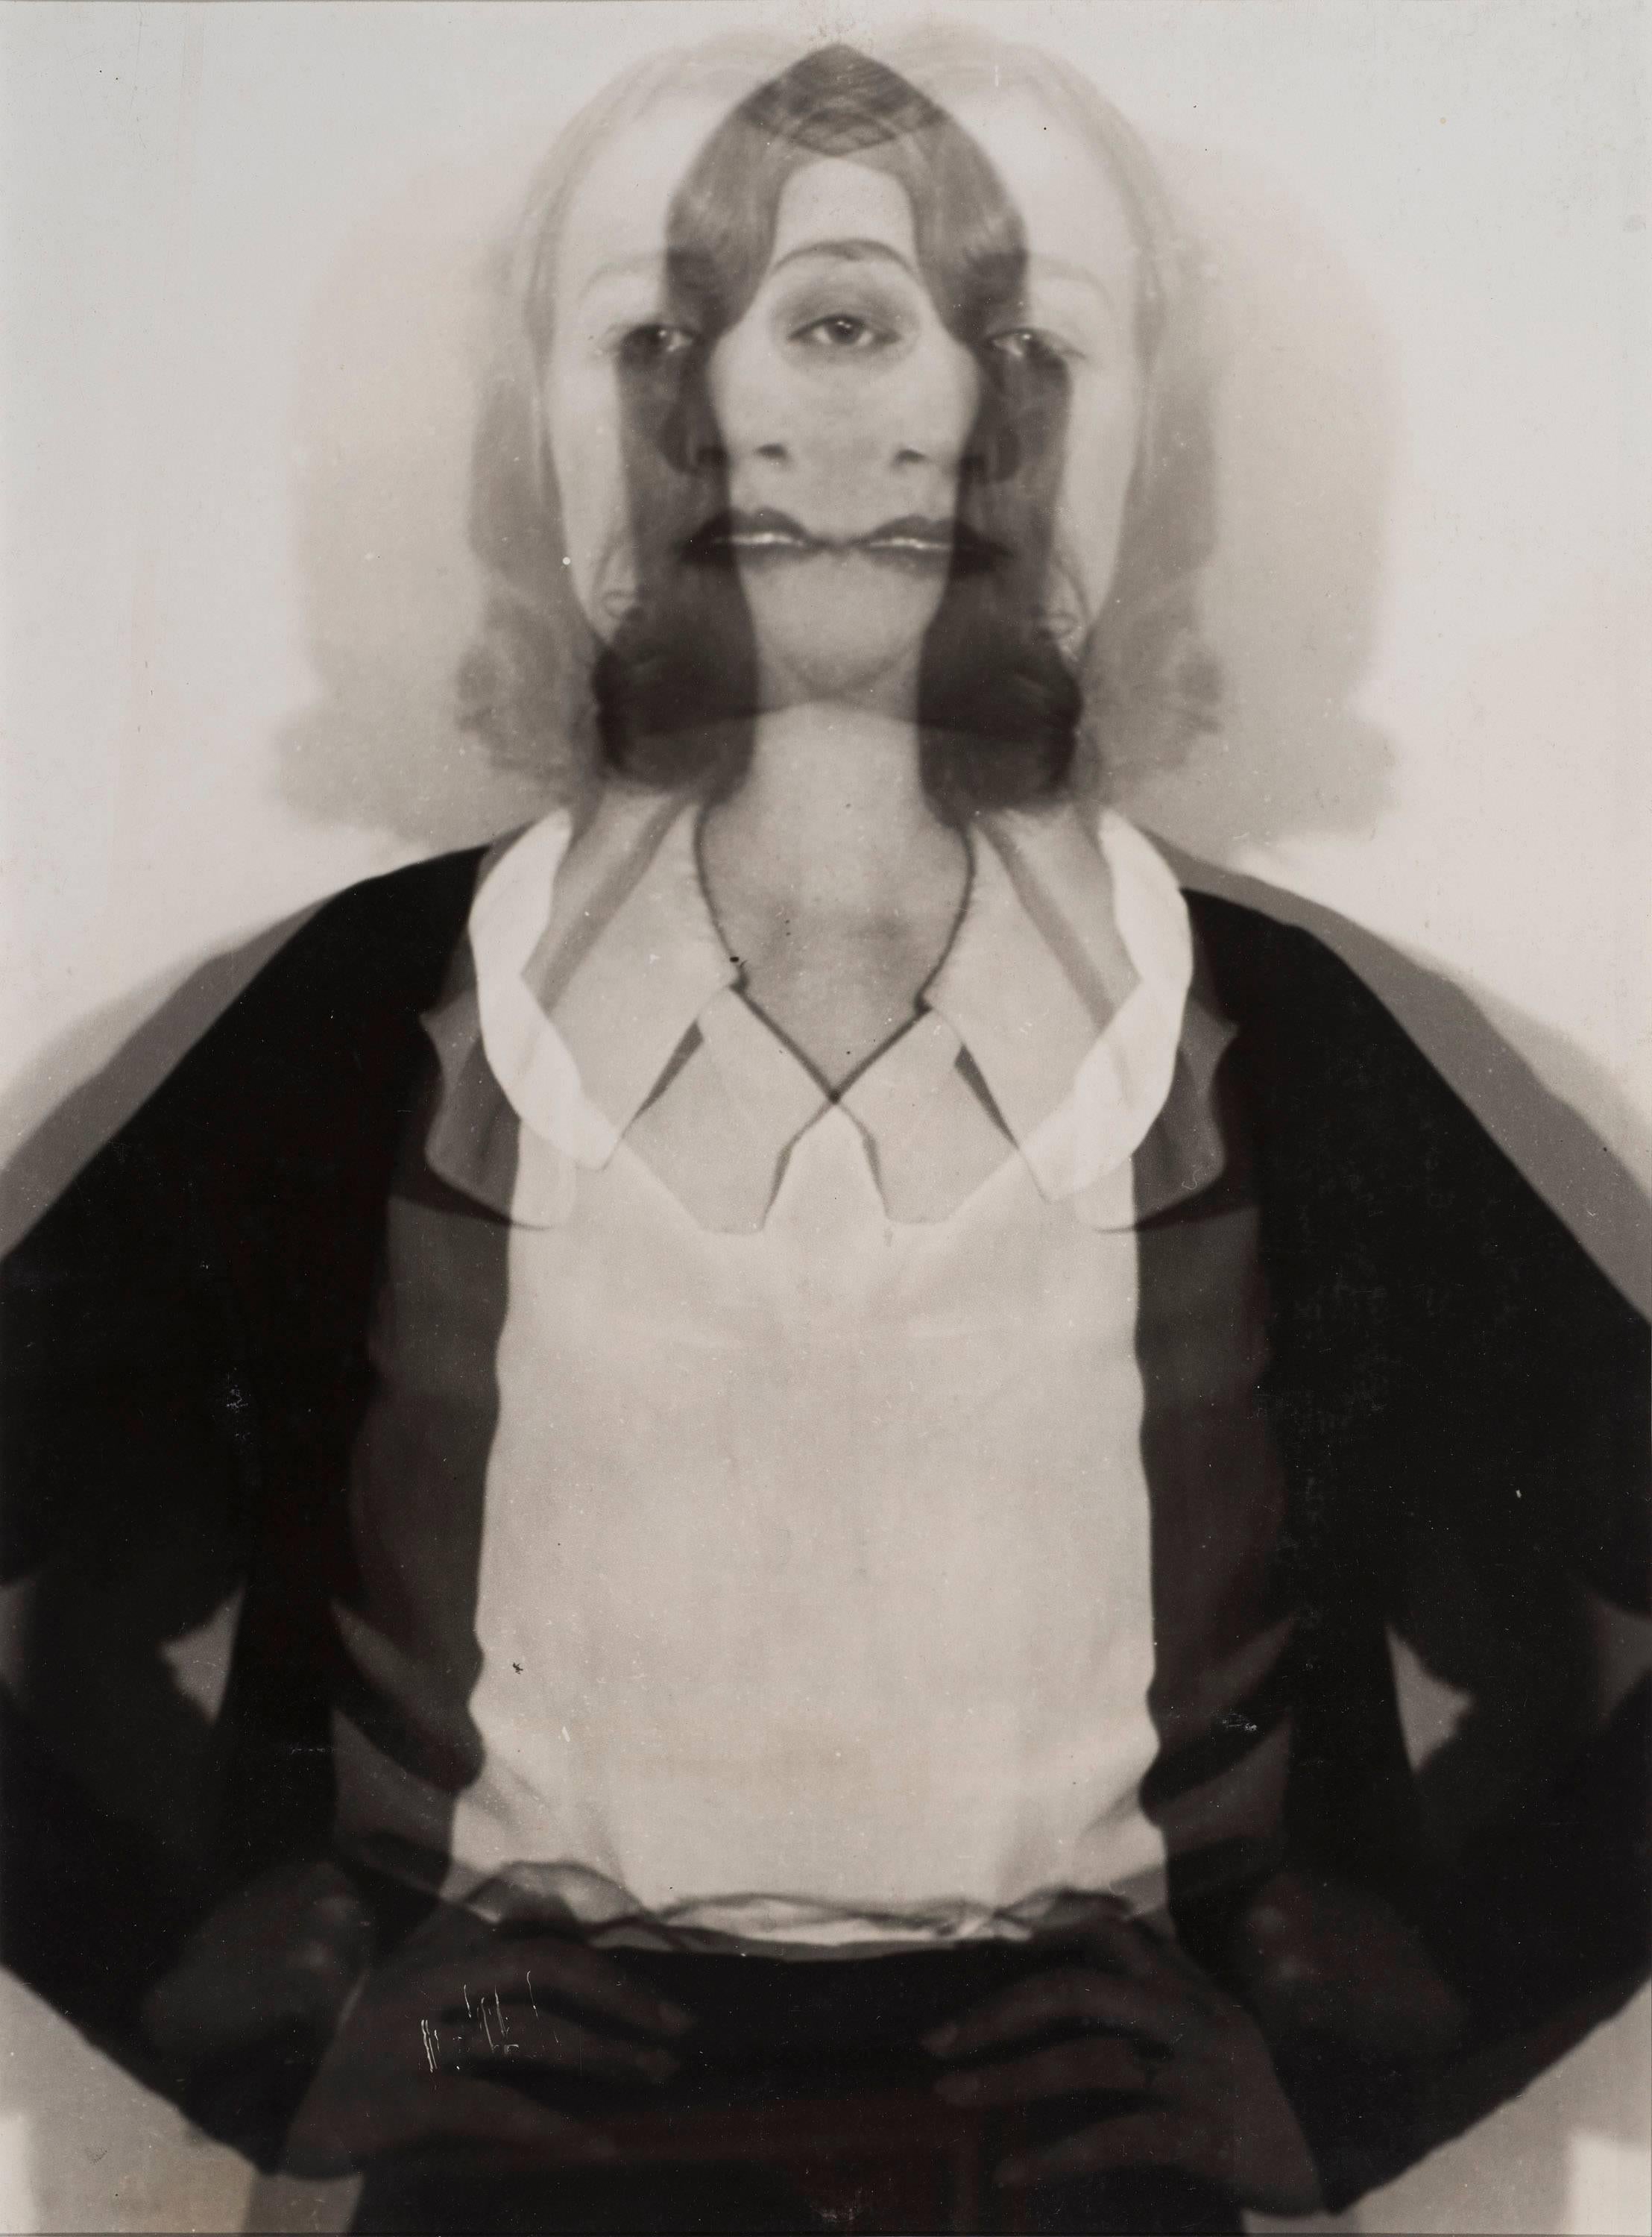 Erwin Blumenfeld Black and White Photograph - Double Exposure, Amsterdam